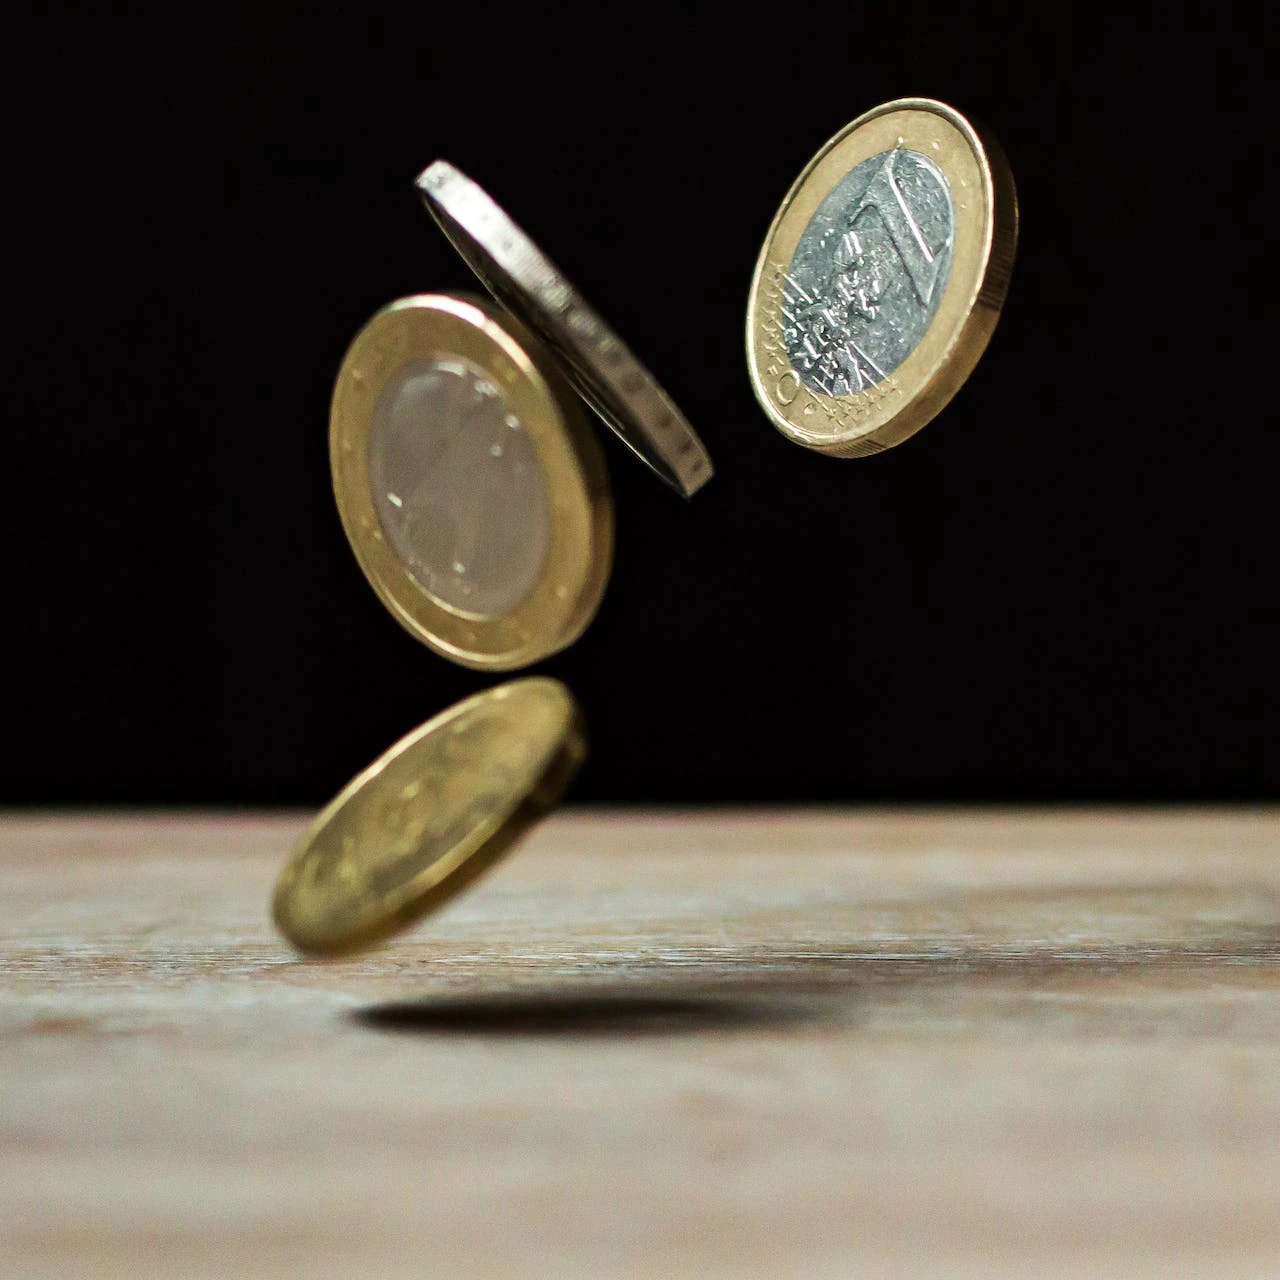 falling pound coins